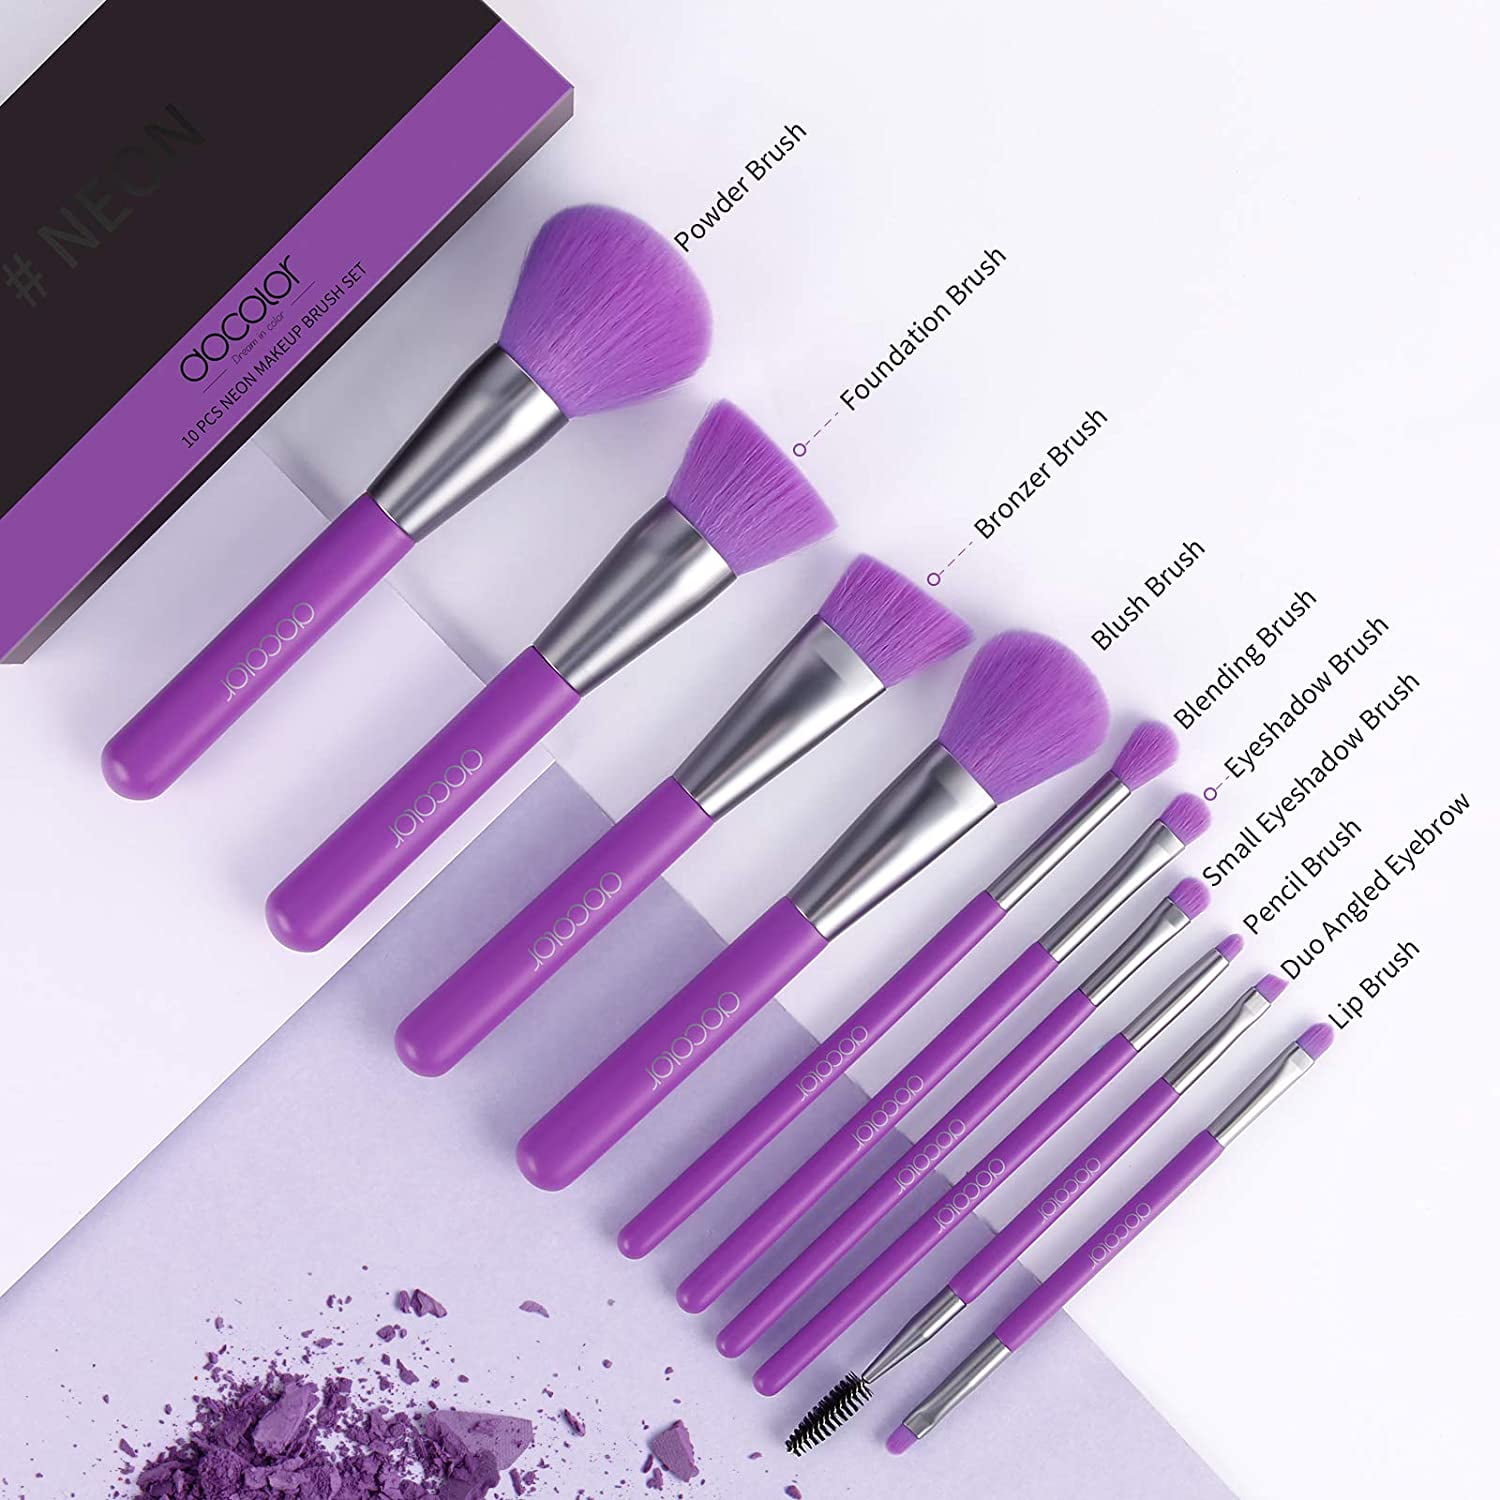 Essential Eye Set (Neon Brush Set) - 10 Eye Makeup Brushes – SUVA Beauty